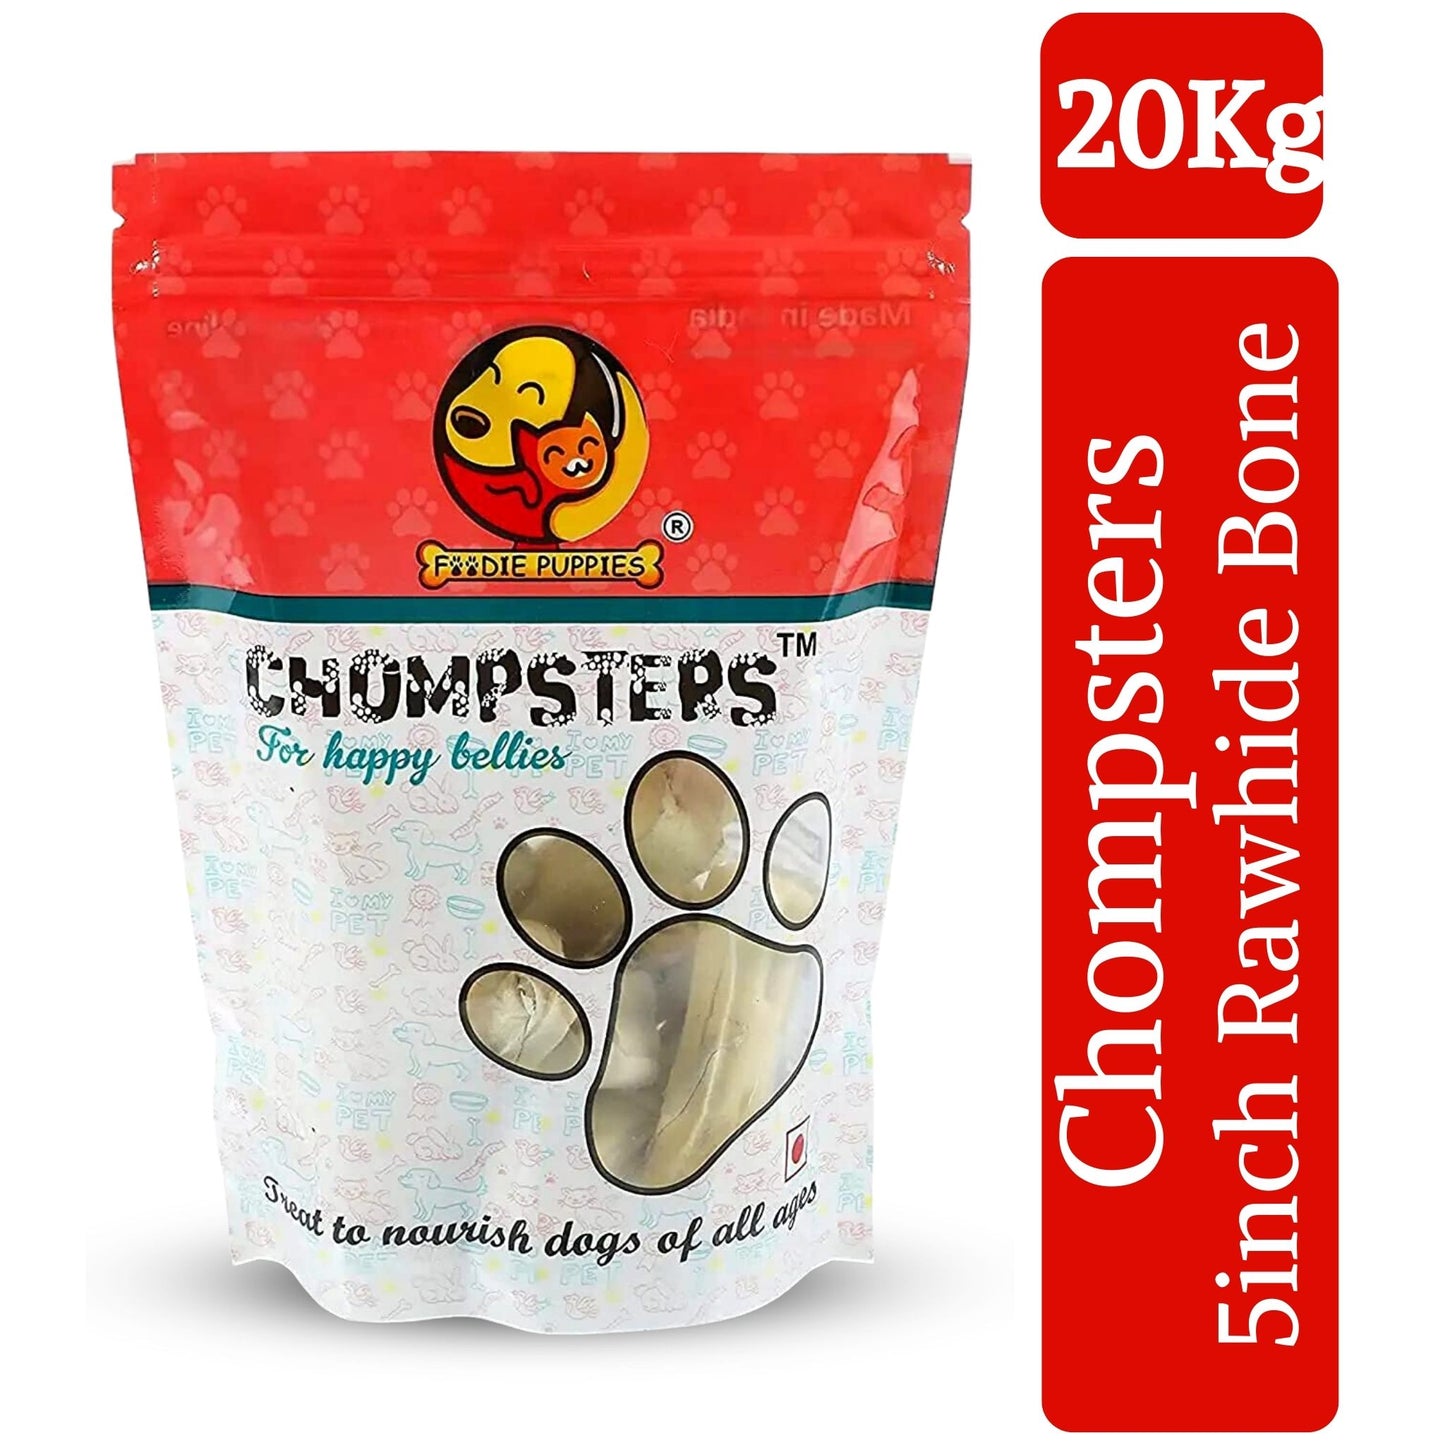 Foodie Puppies Chompsters Rawhide Bone for Dogs - 5inch Bone, 20Kg